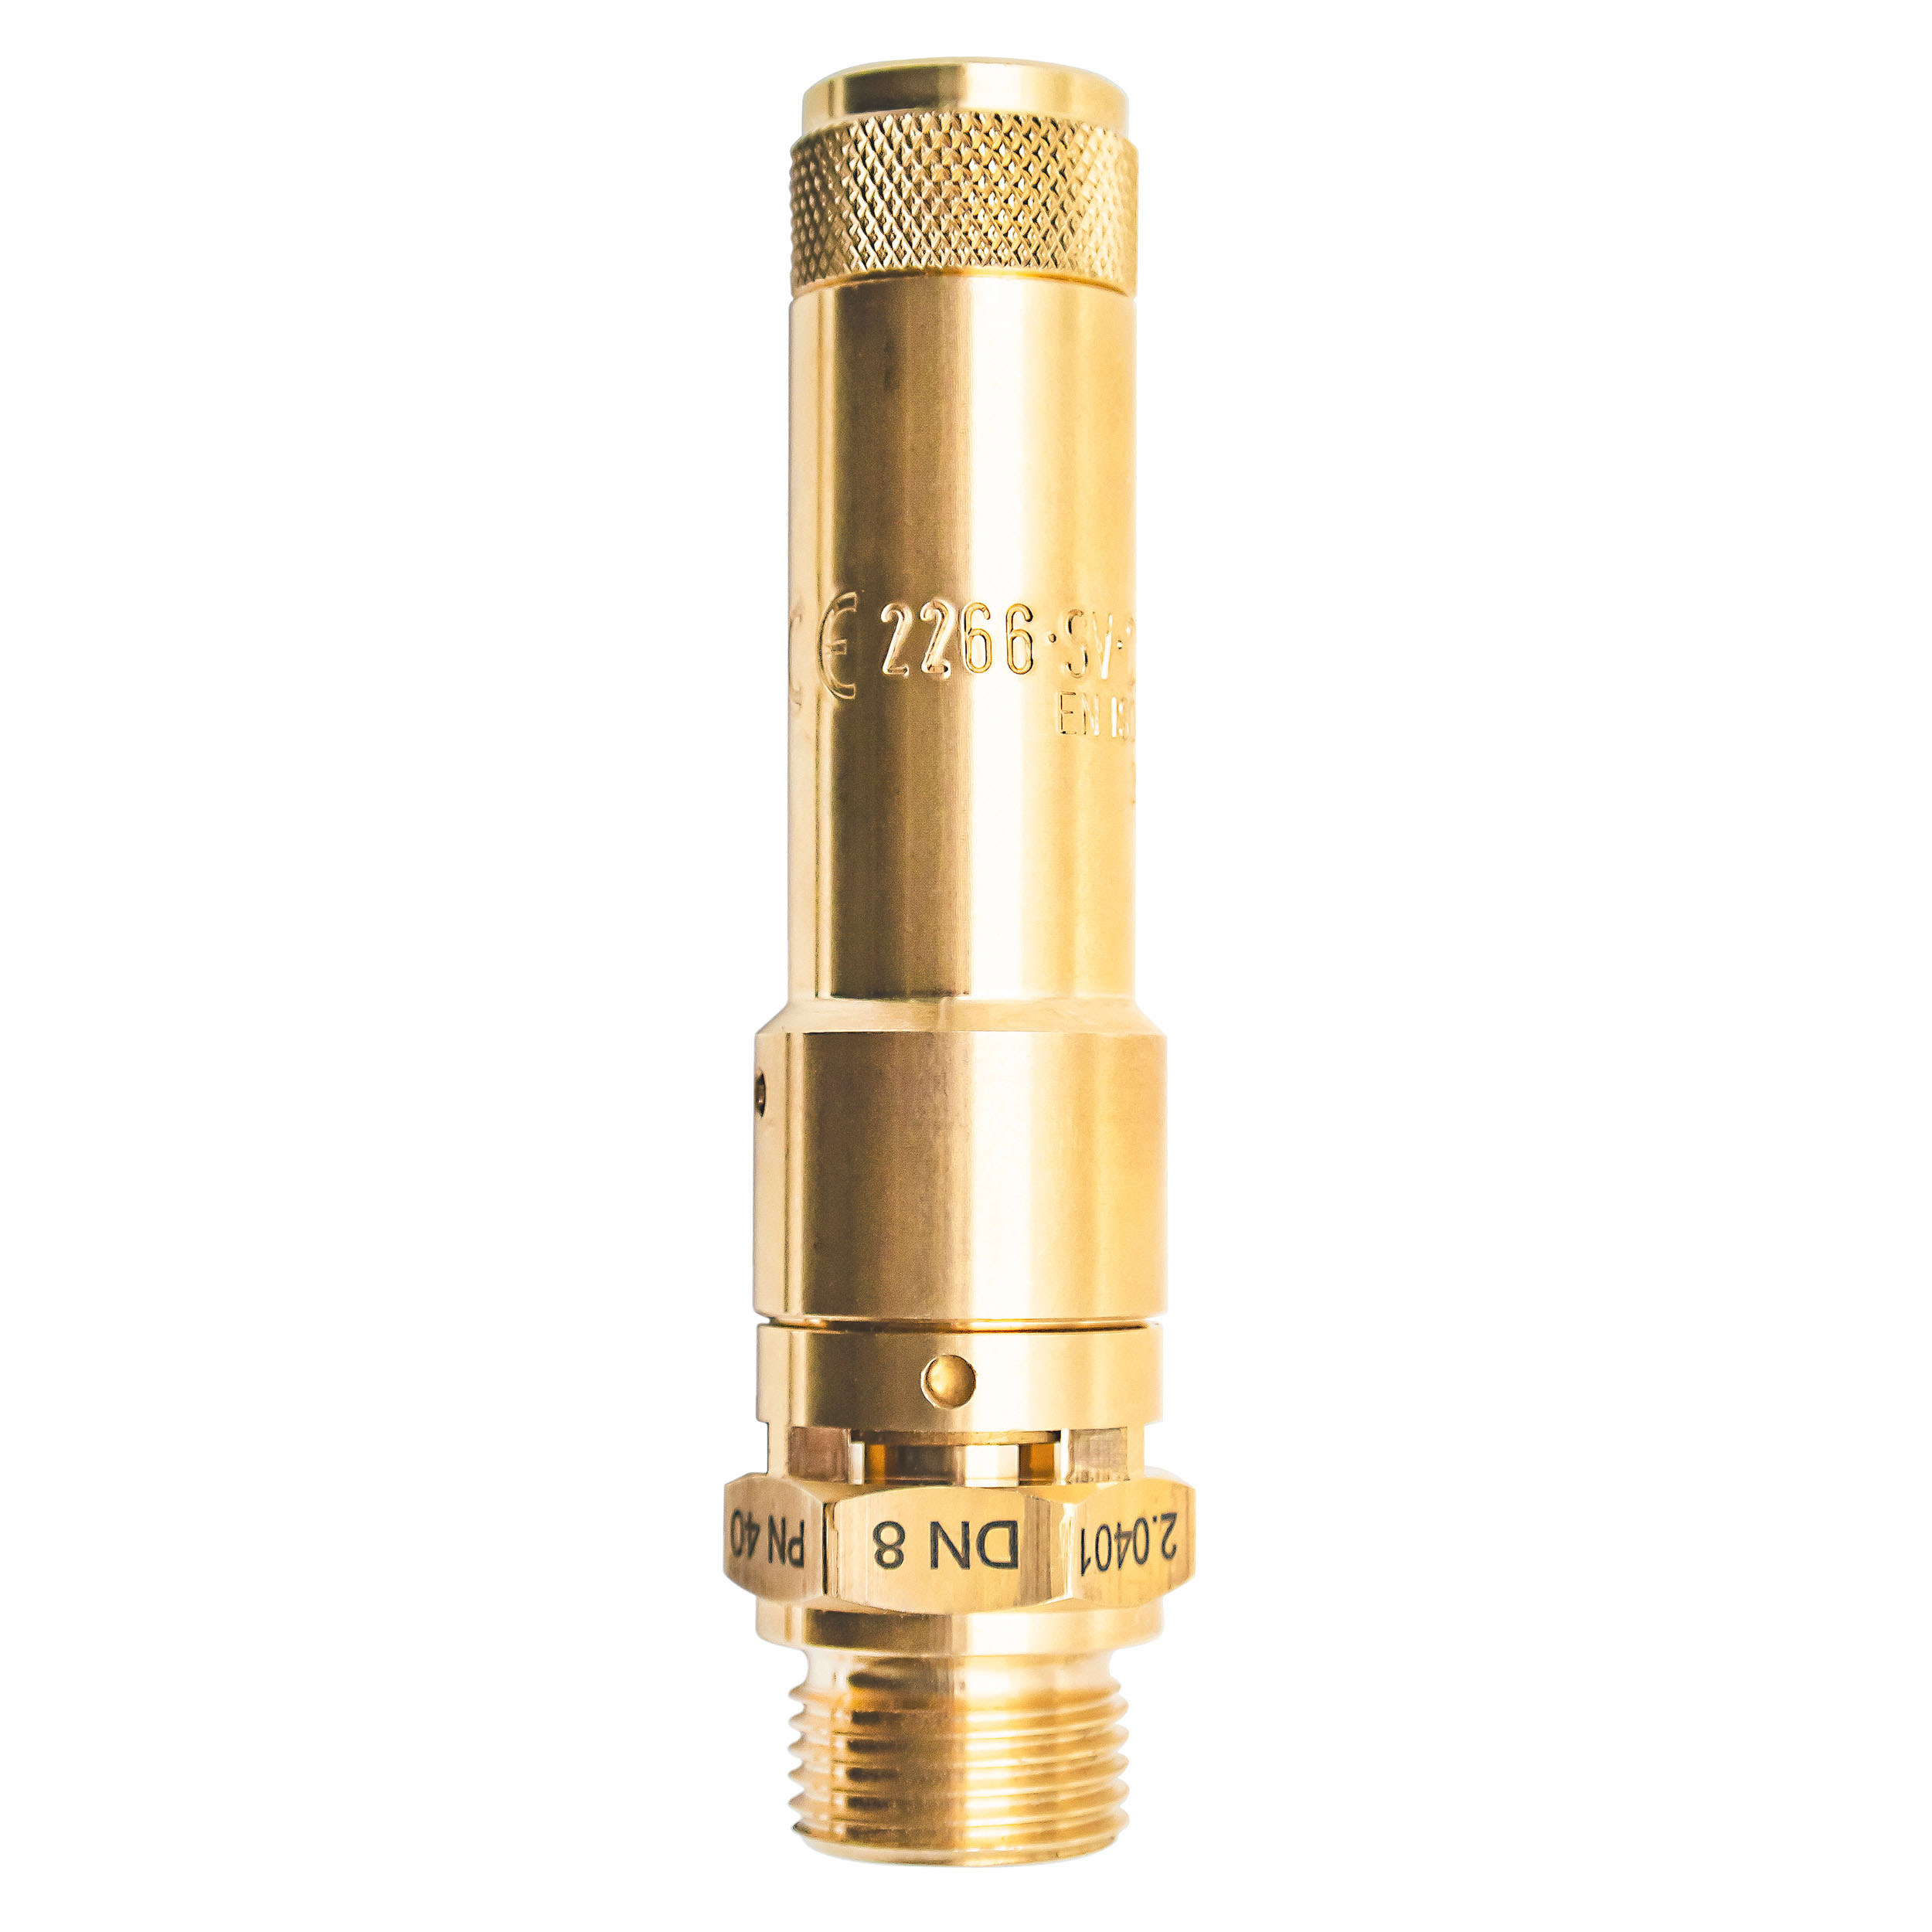 Savety valve component tested DN 8, G⅜, set pressure: 2.3 bar (33,35 psi)